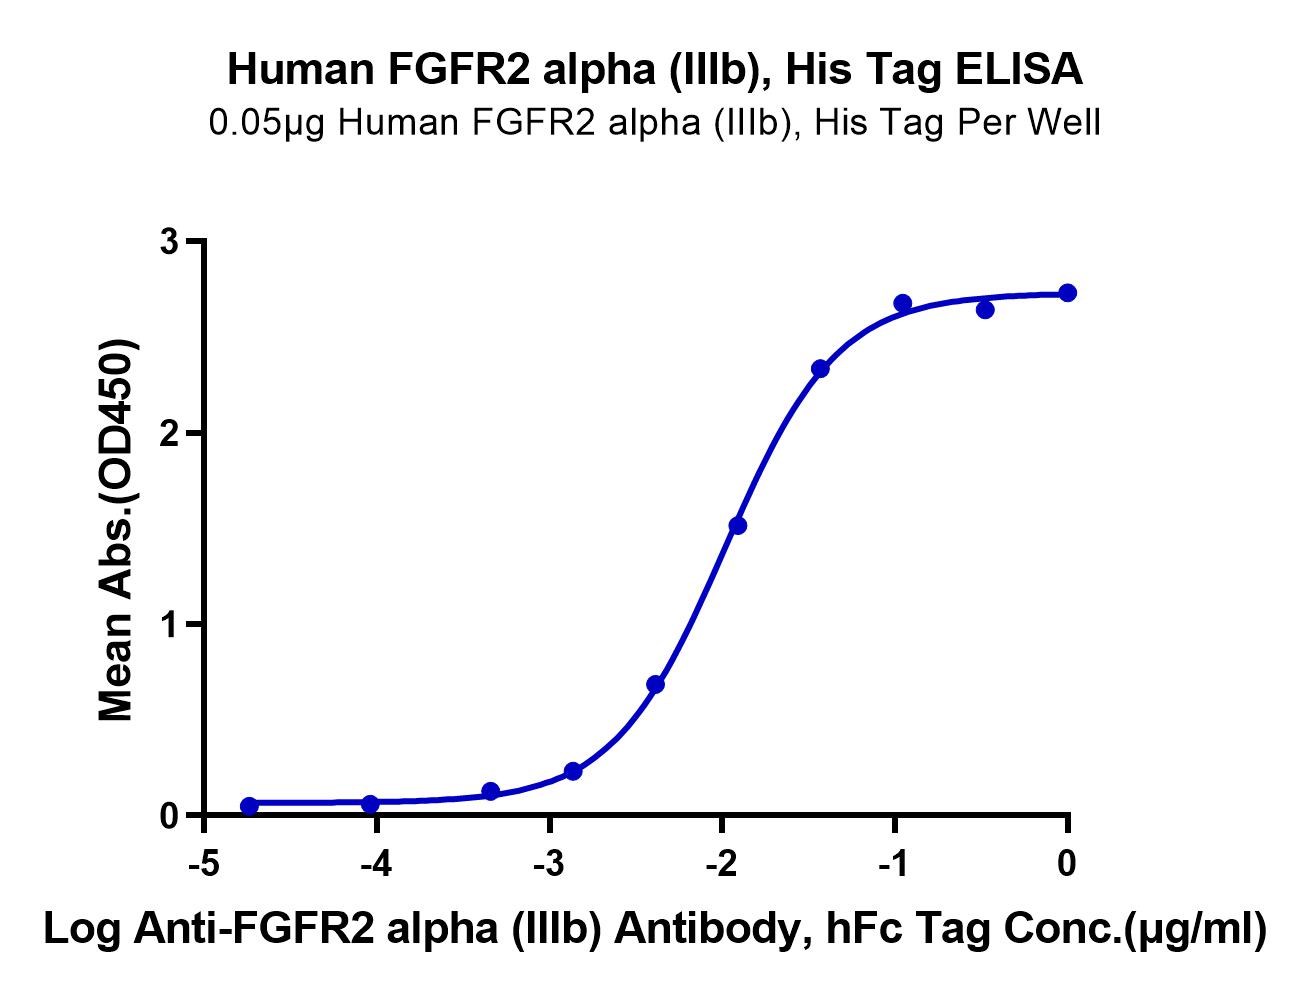 Human FGFR2 alpha (IIIb) Protein (LTP10481)